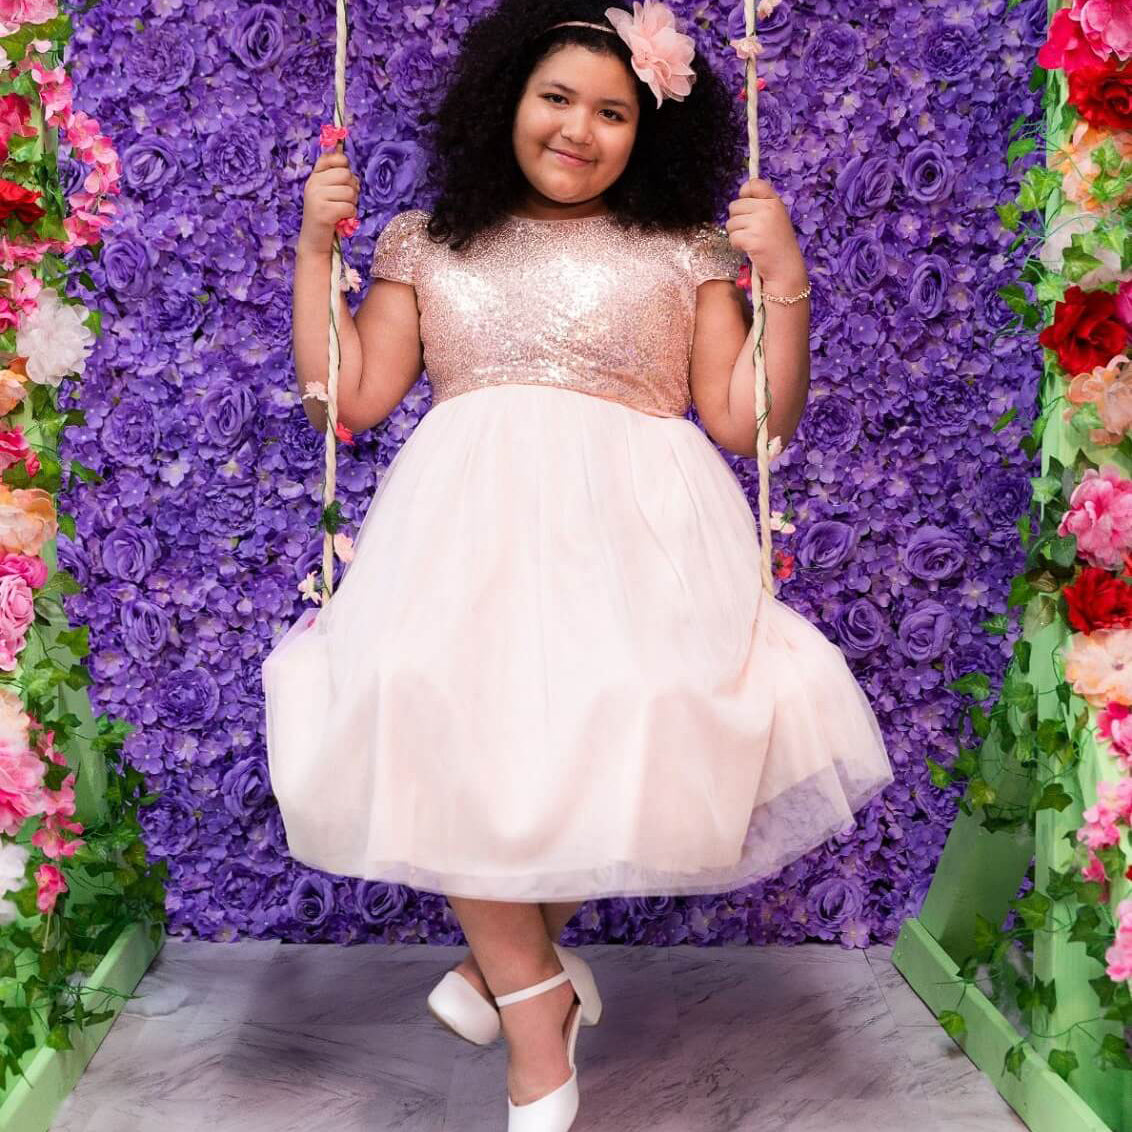 Girl on a swing in a UK Flower Girl party dress